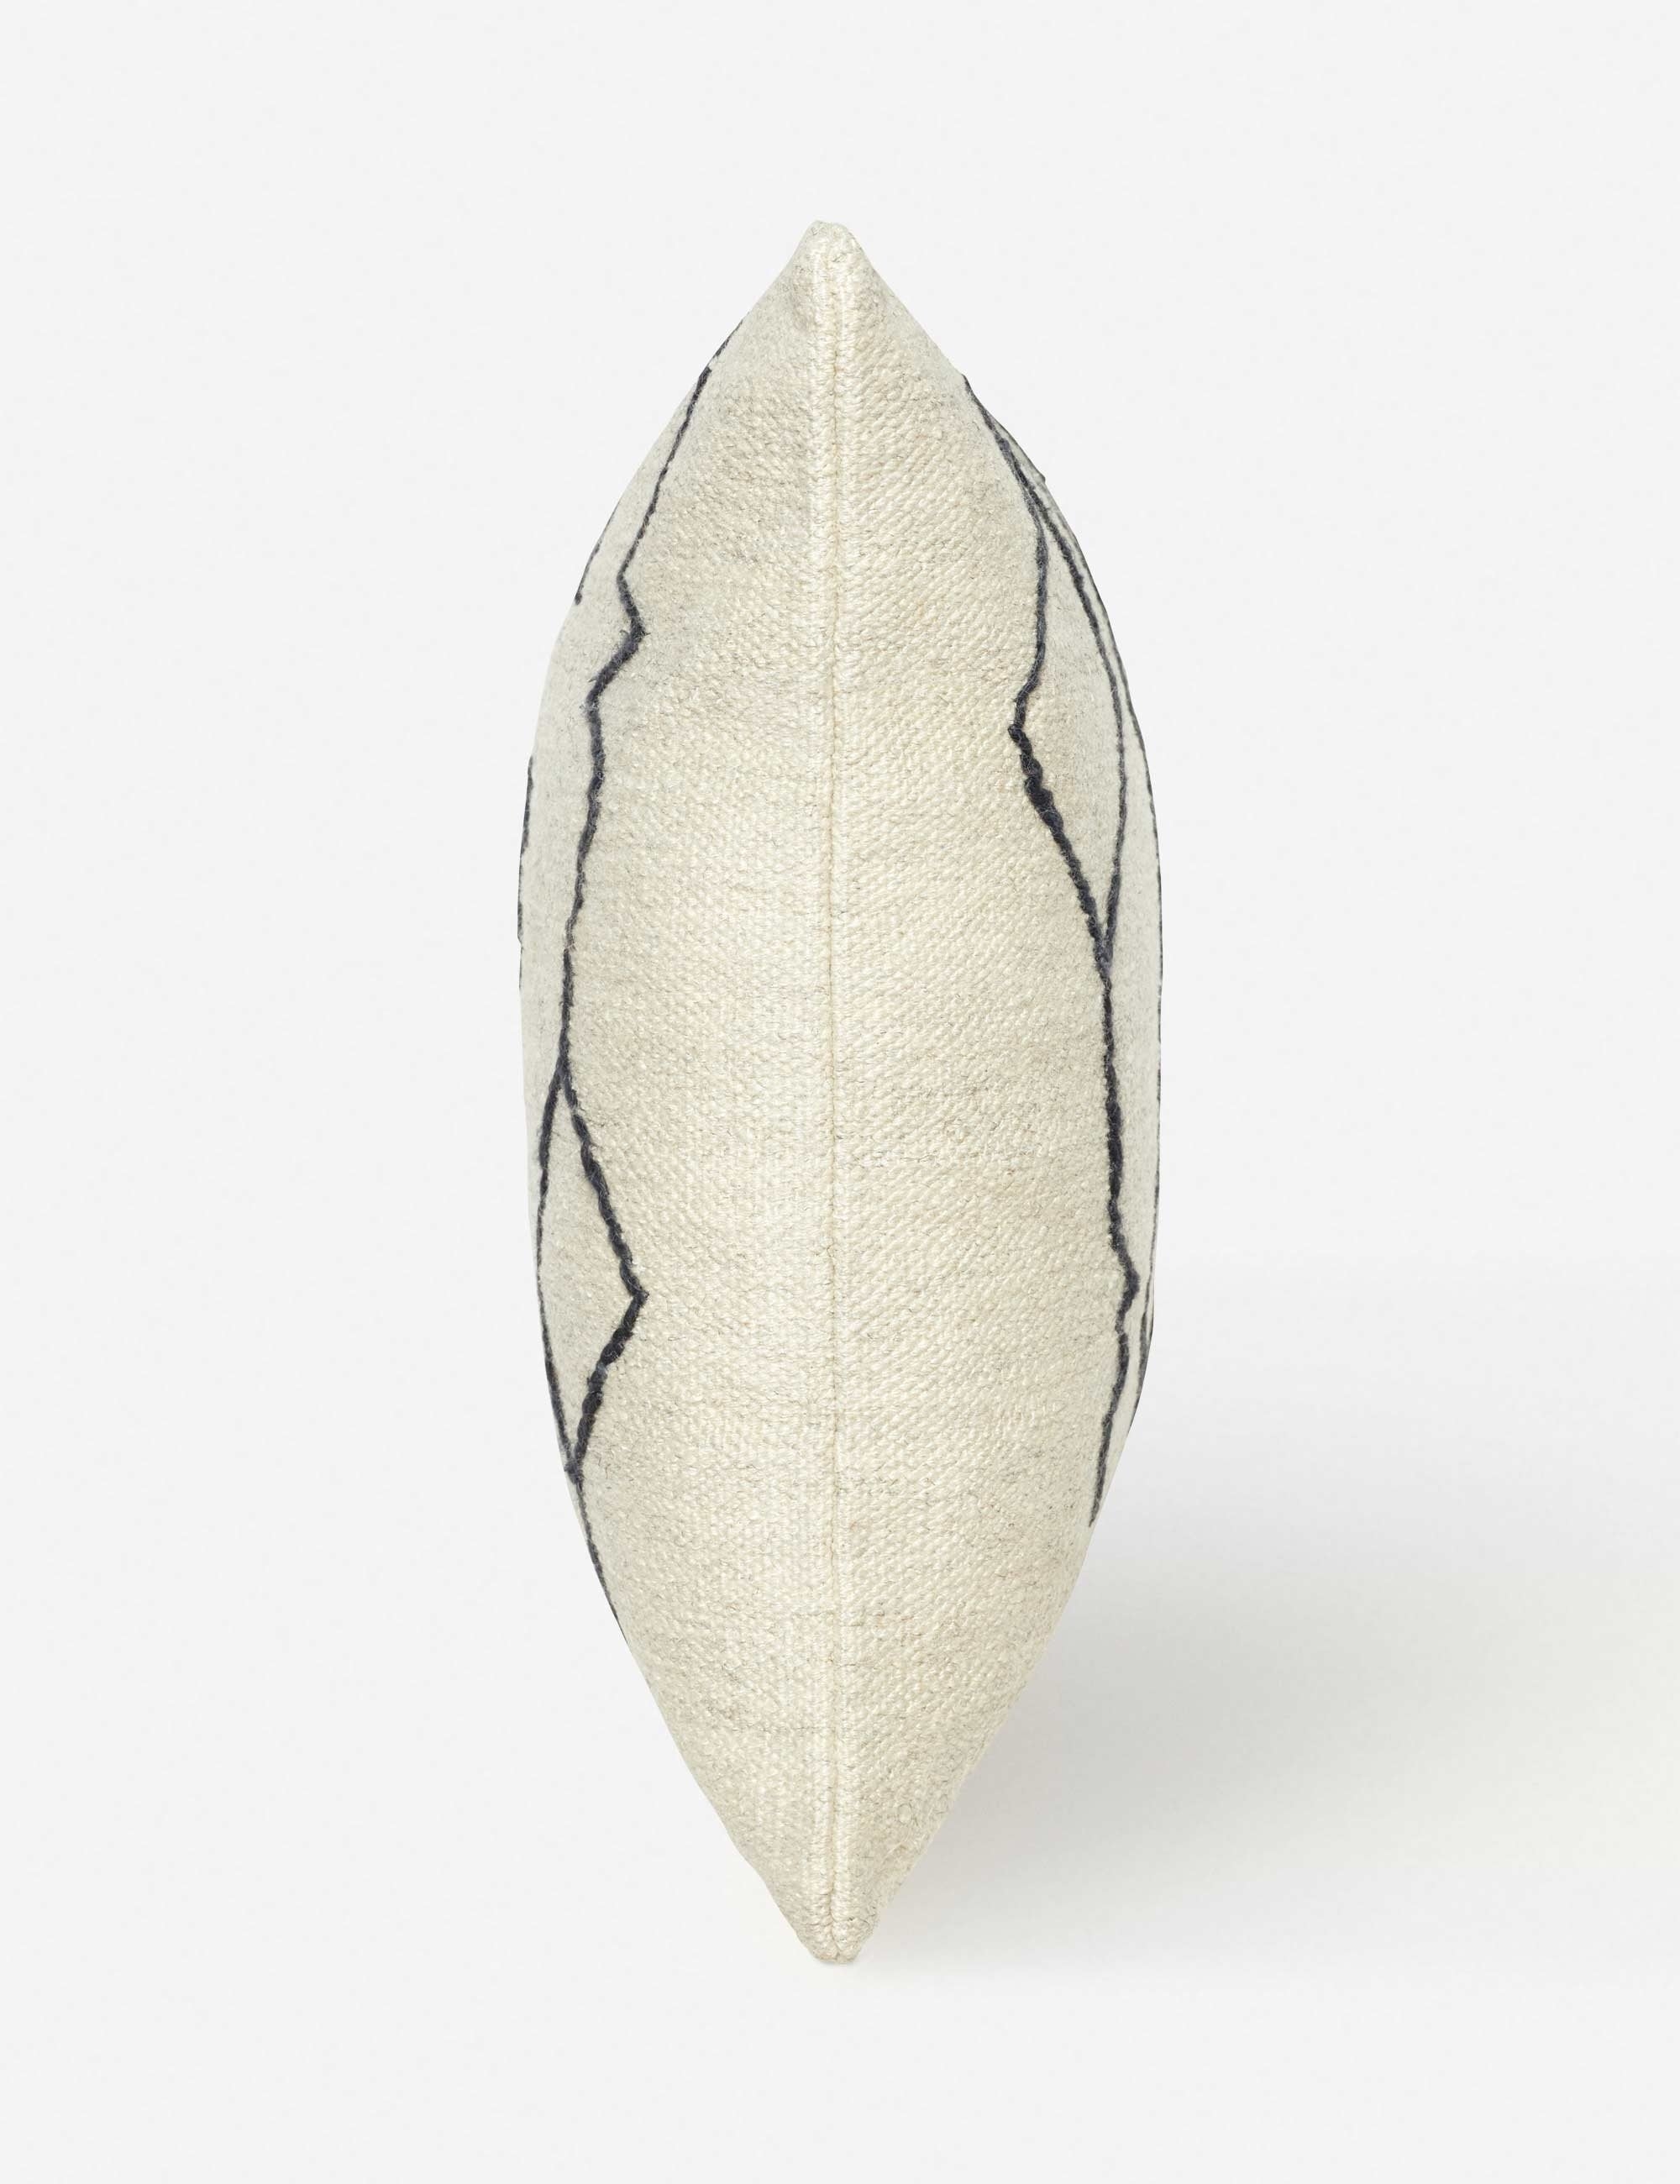 Moroccan Flatweave Pillow By Sarah Sherman Samuel - Black and Natural / 12" x 20" - Image 5